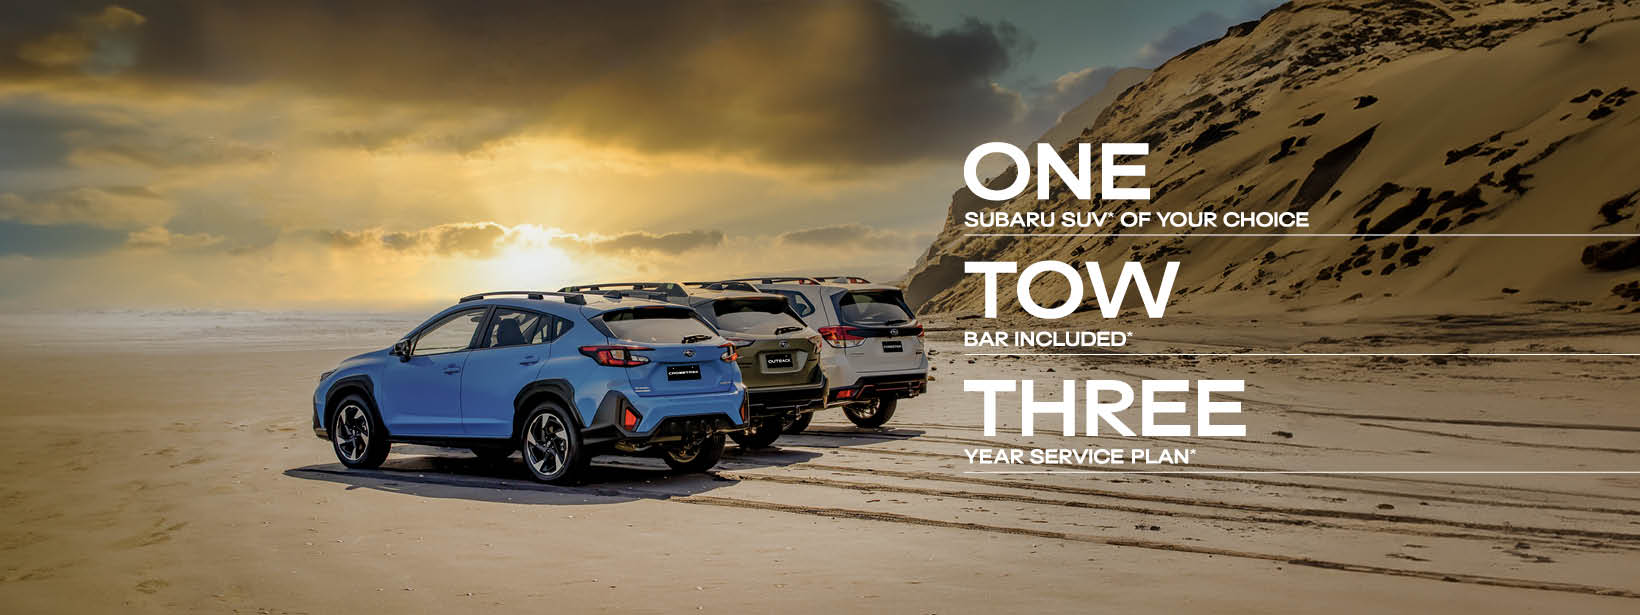 ONE Subaru SUV, TOW bar included, THREE year service plan !